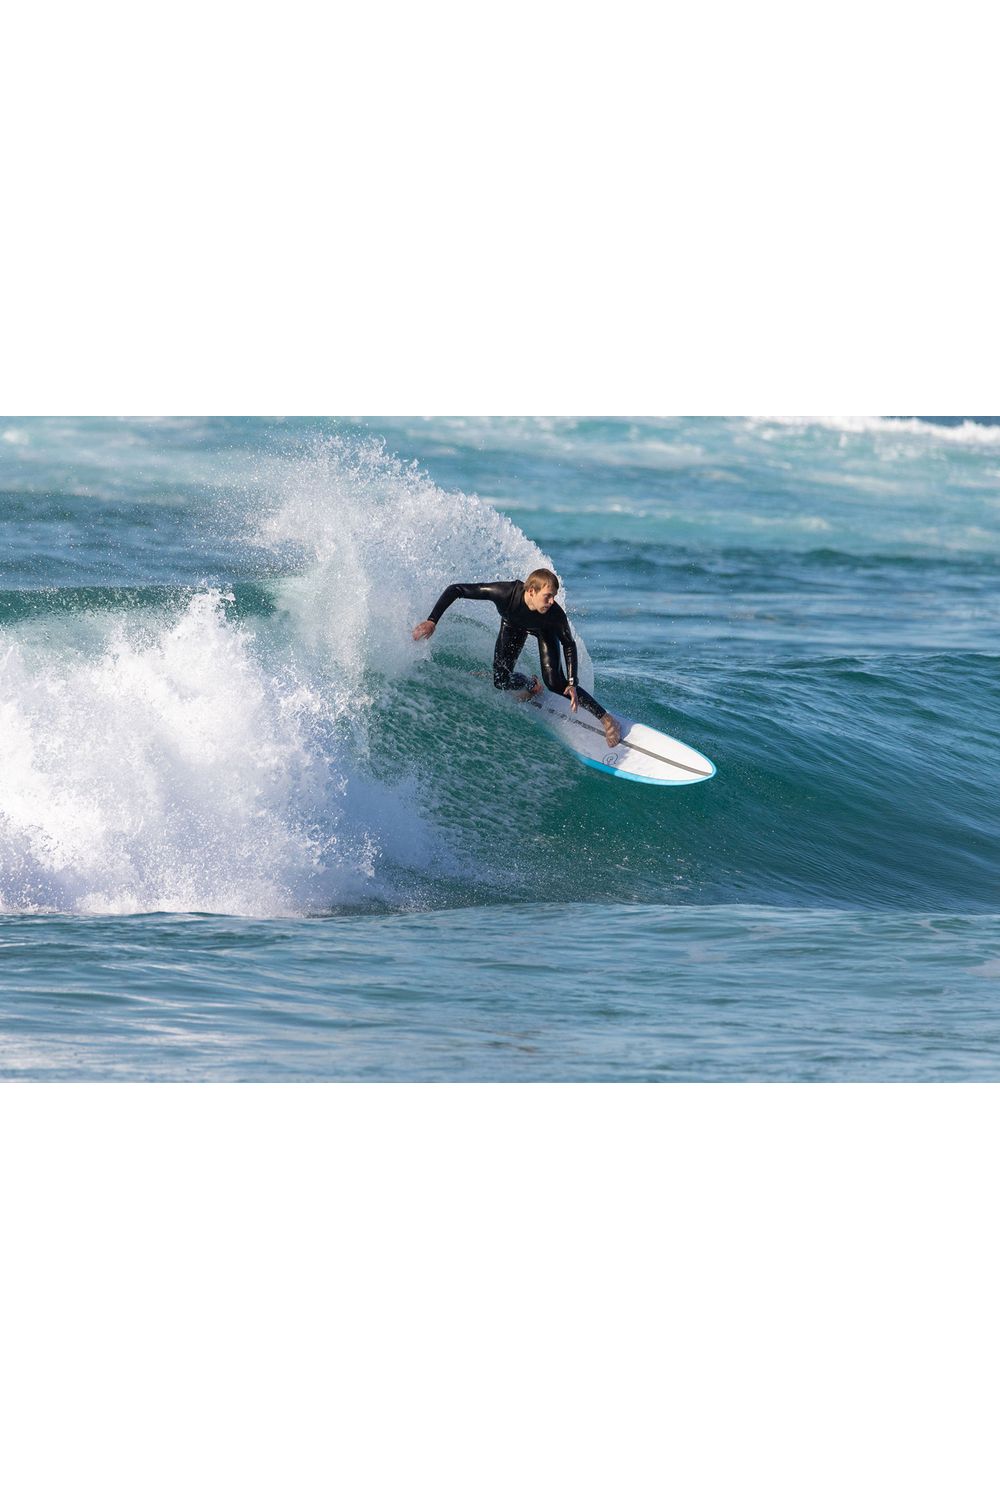 Torq TET Mod Fun V+ Pinline Seagreen Surfboard